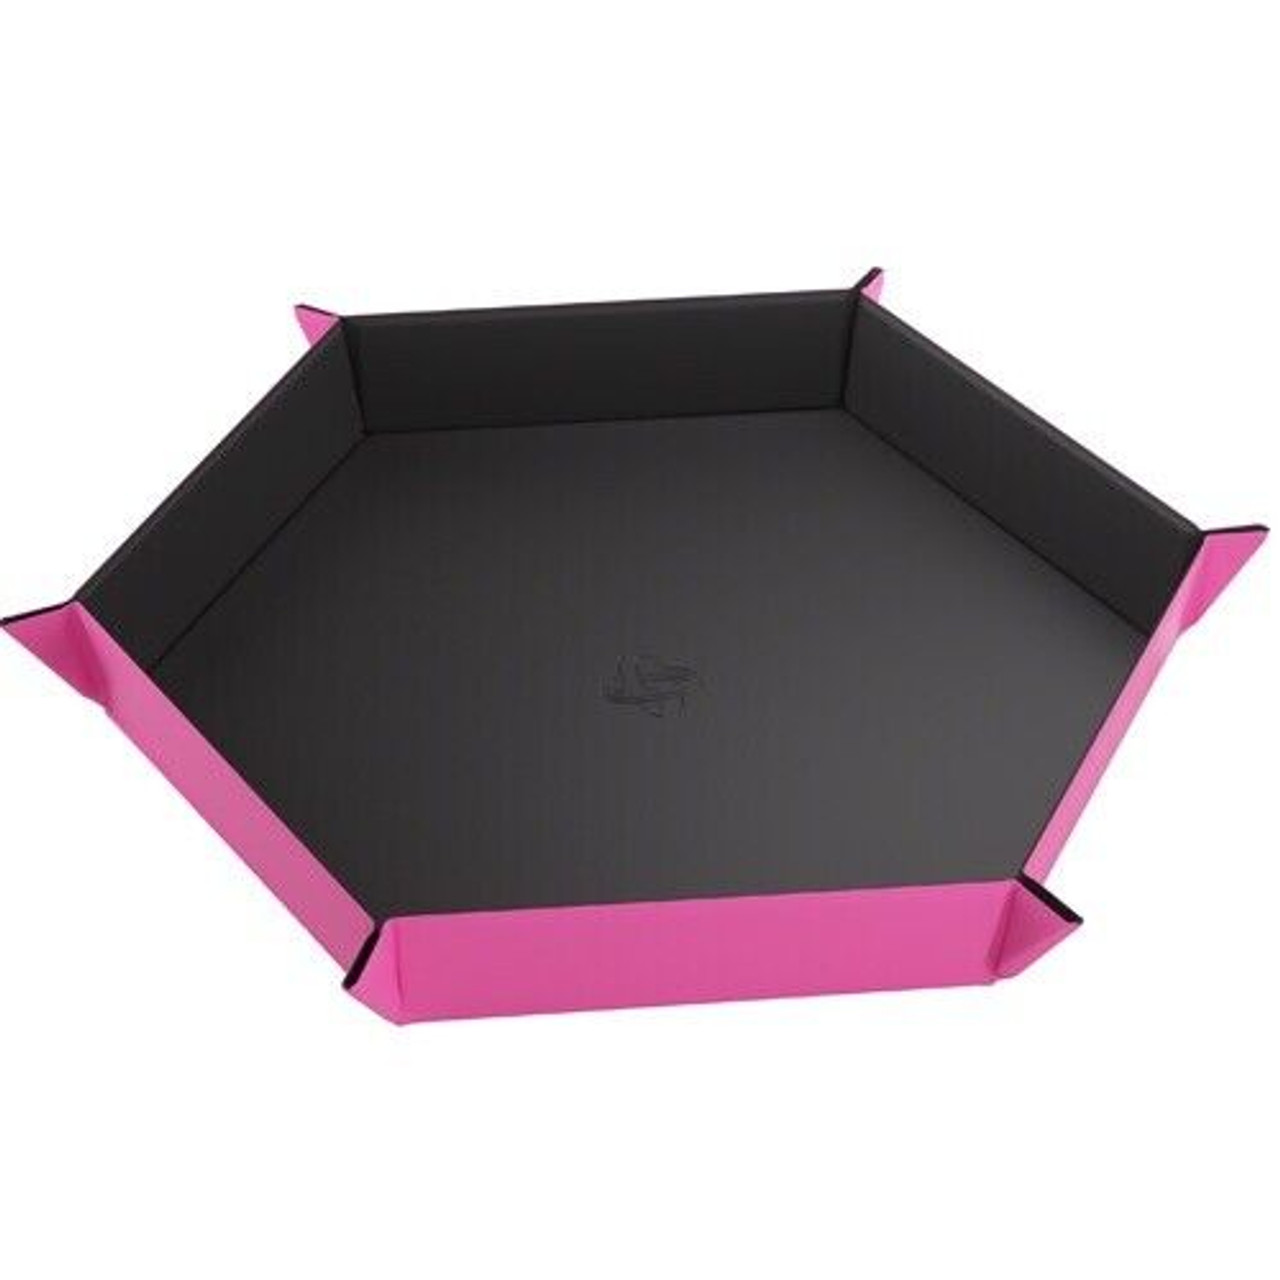 Magnetic Dice Tray: Hexagonal Black/Pink